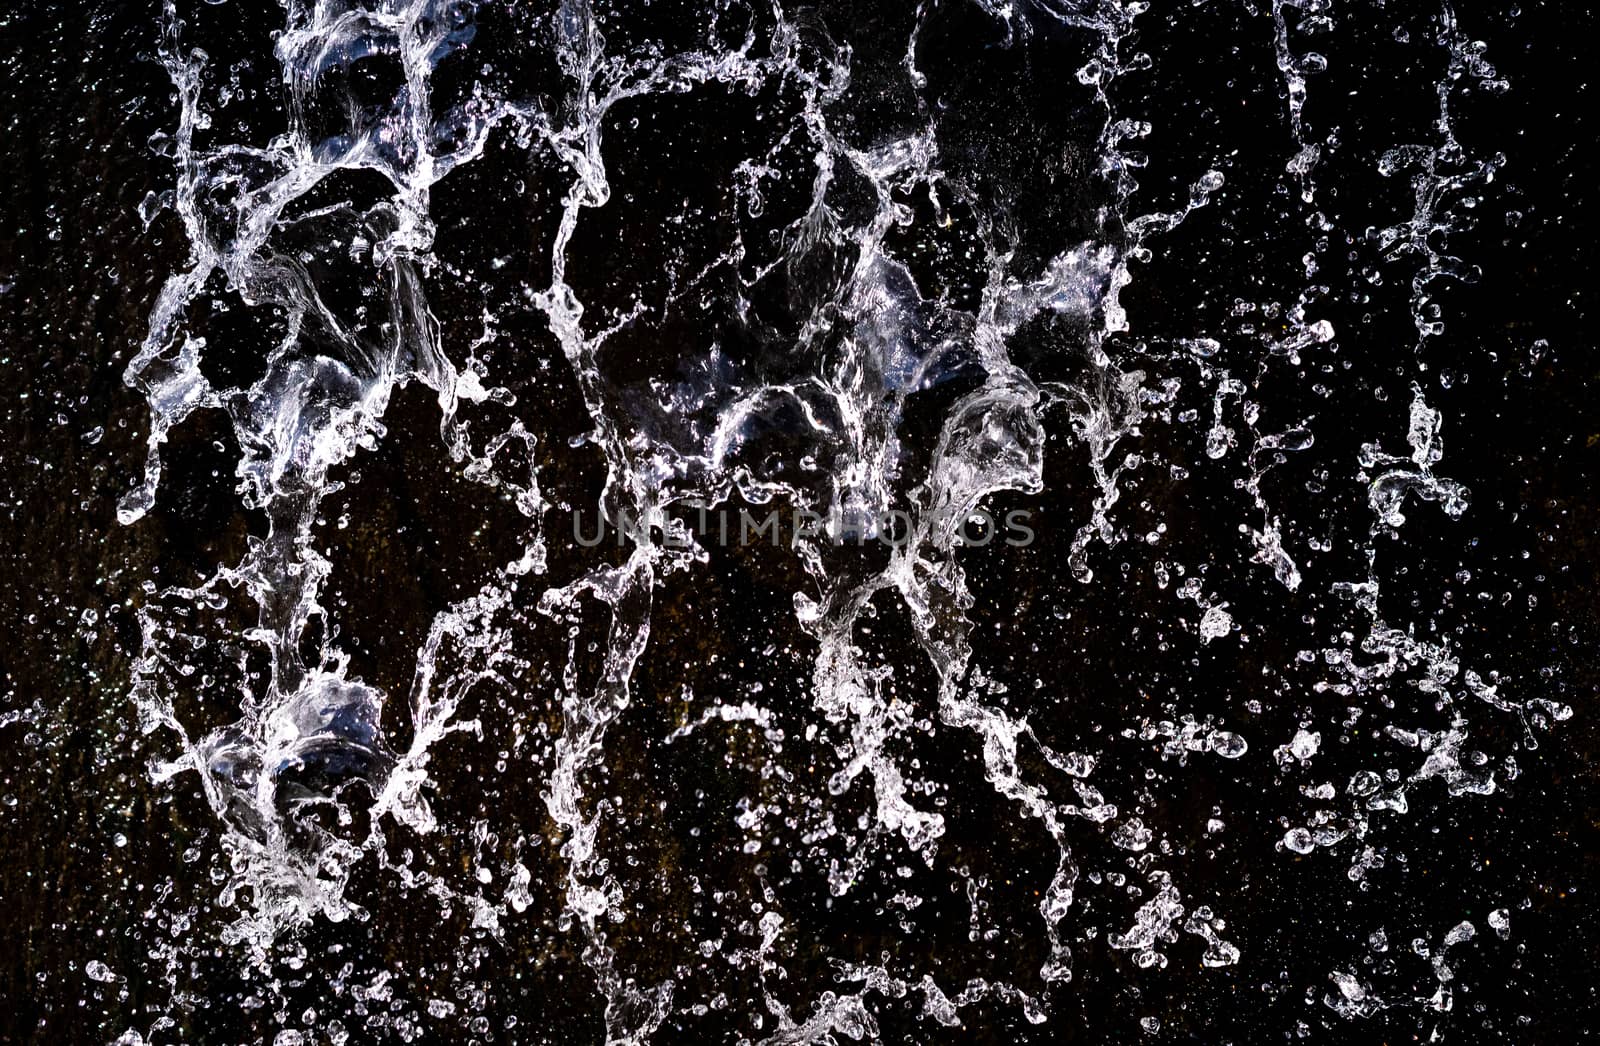 Water splash on black background by domonite